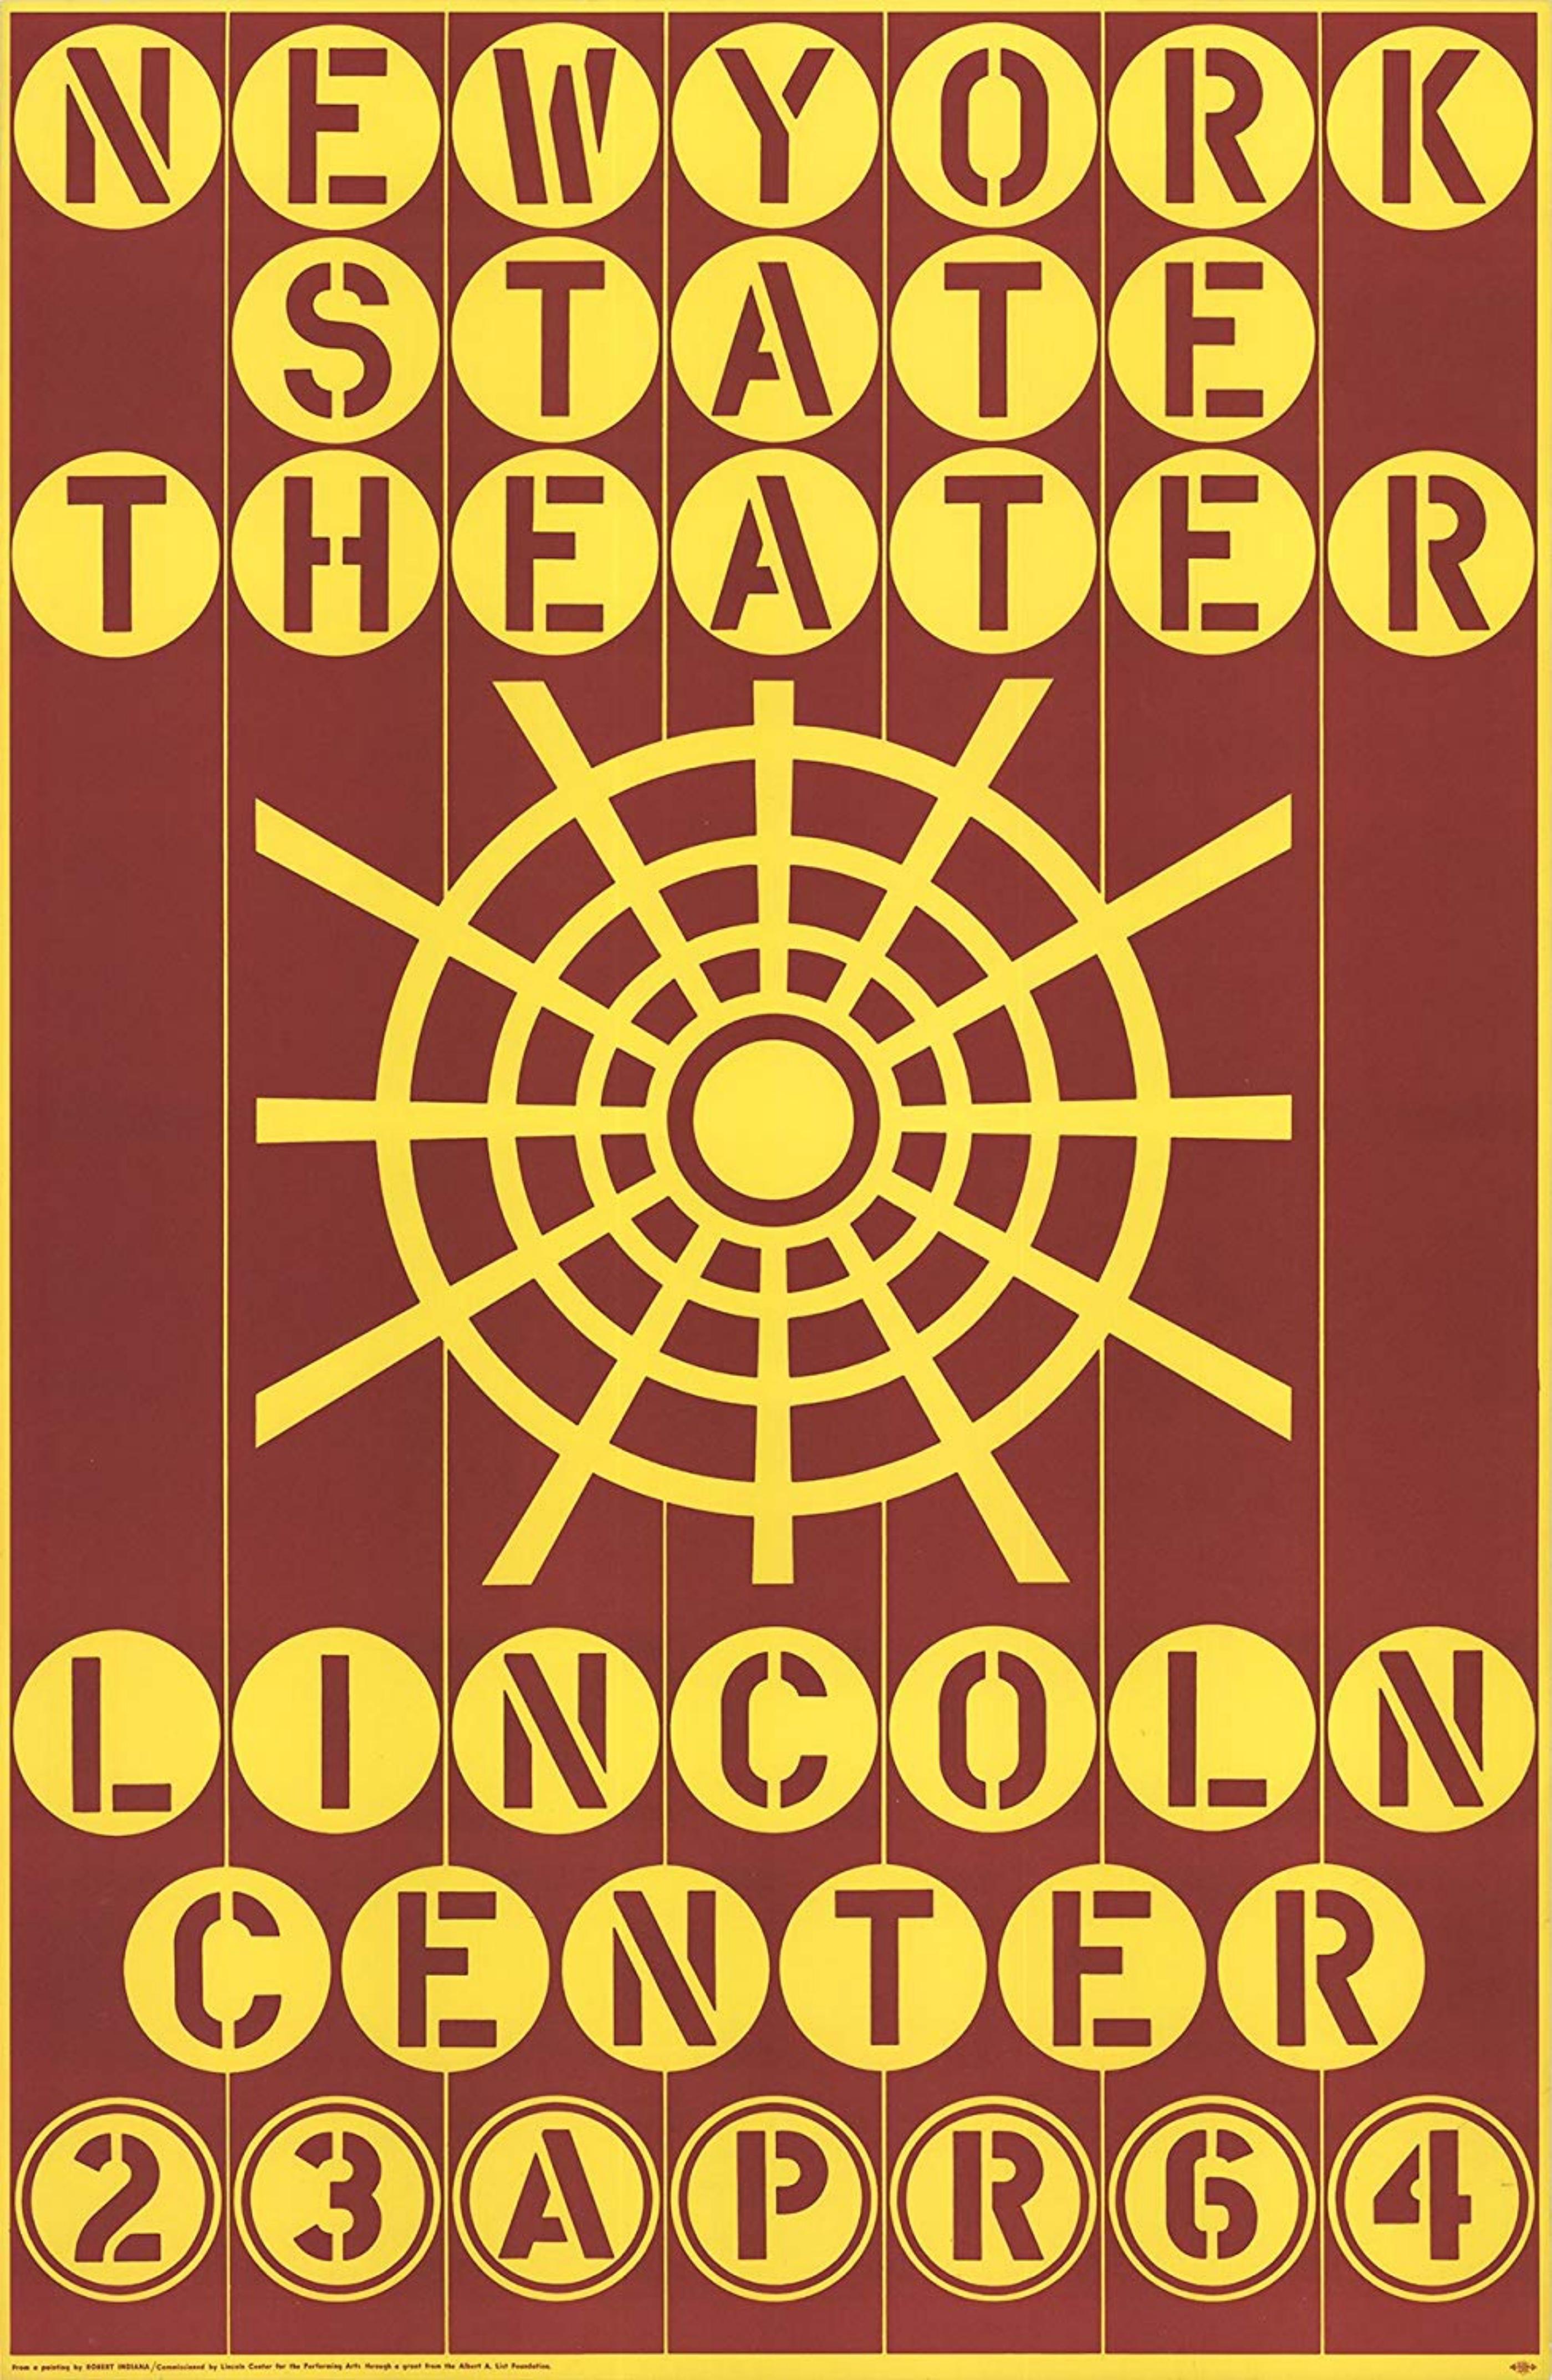 Robert Indiana Abstract Print – New York State Theater, Lincoln Center, New York, Limitierte Auflage 1960er Jahre, Plakat